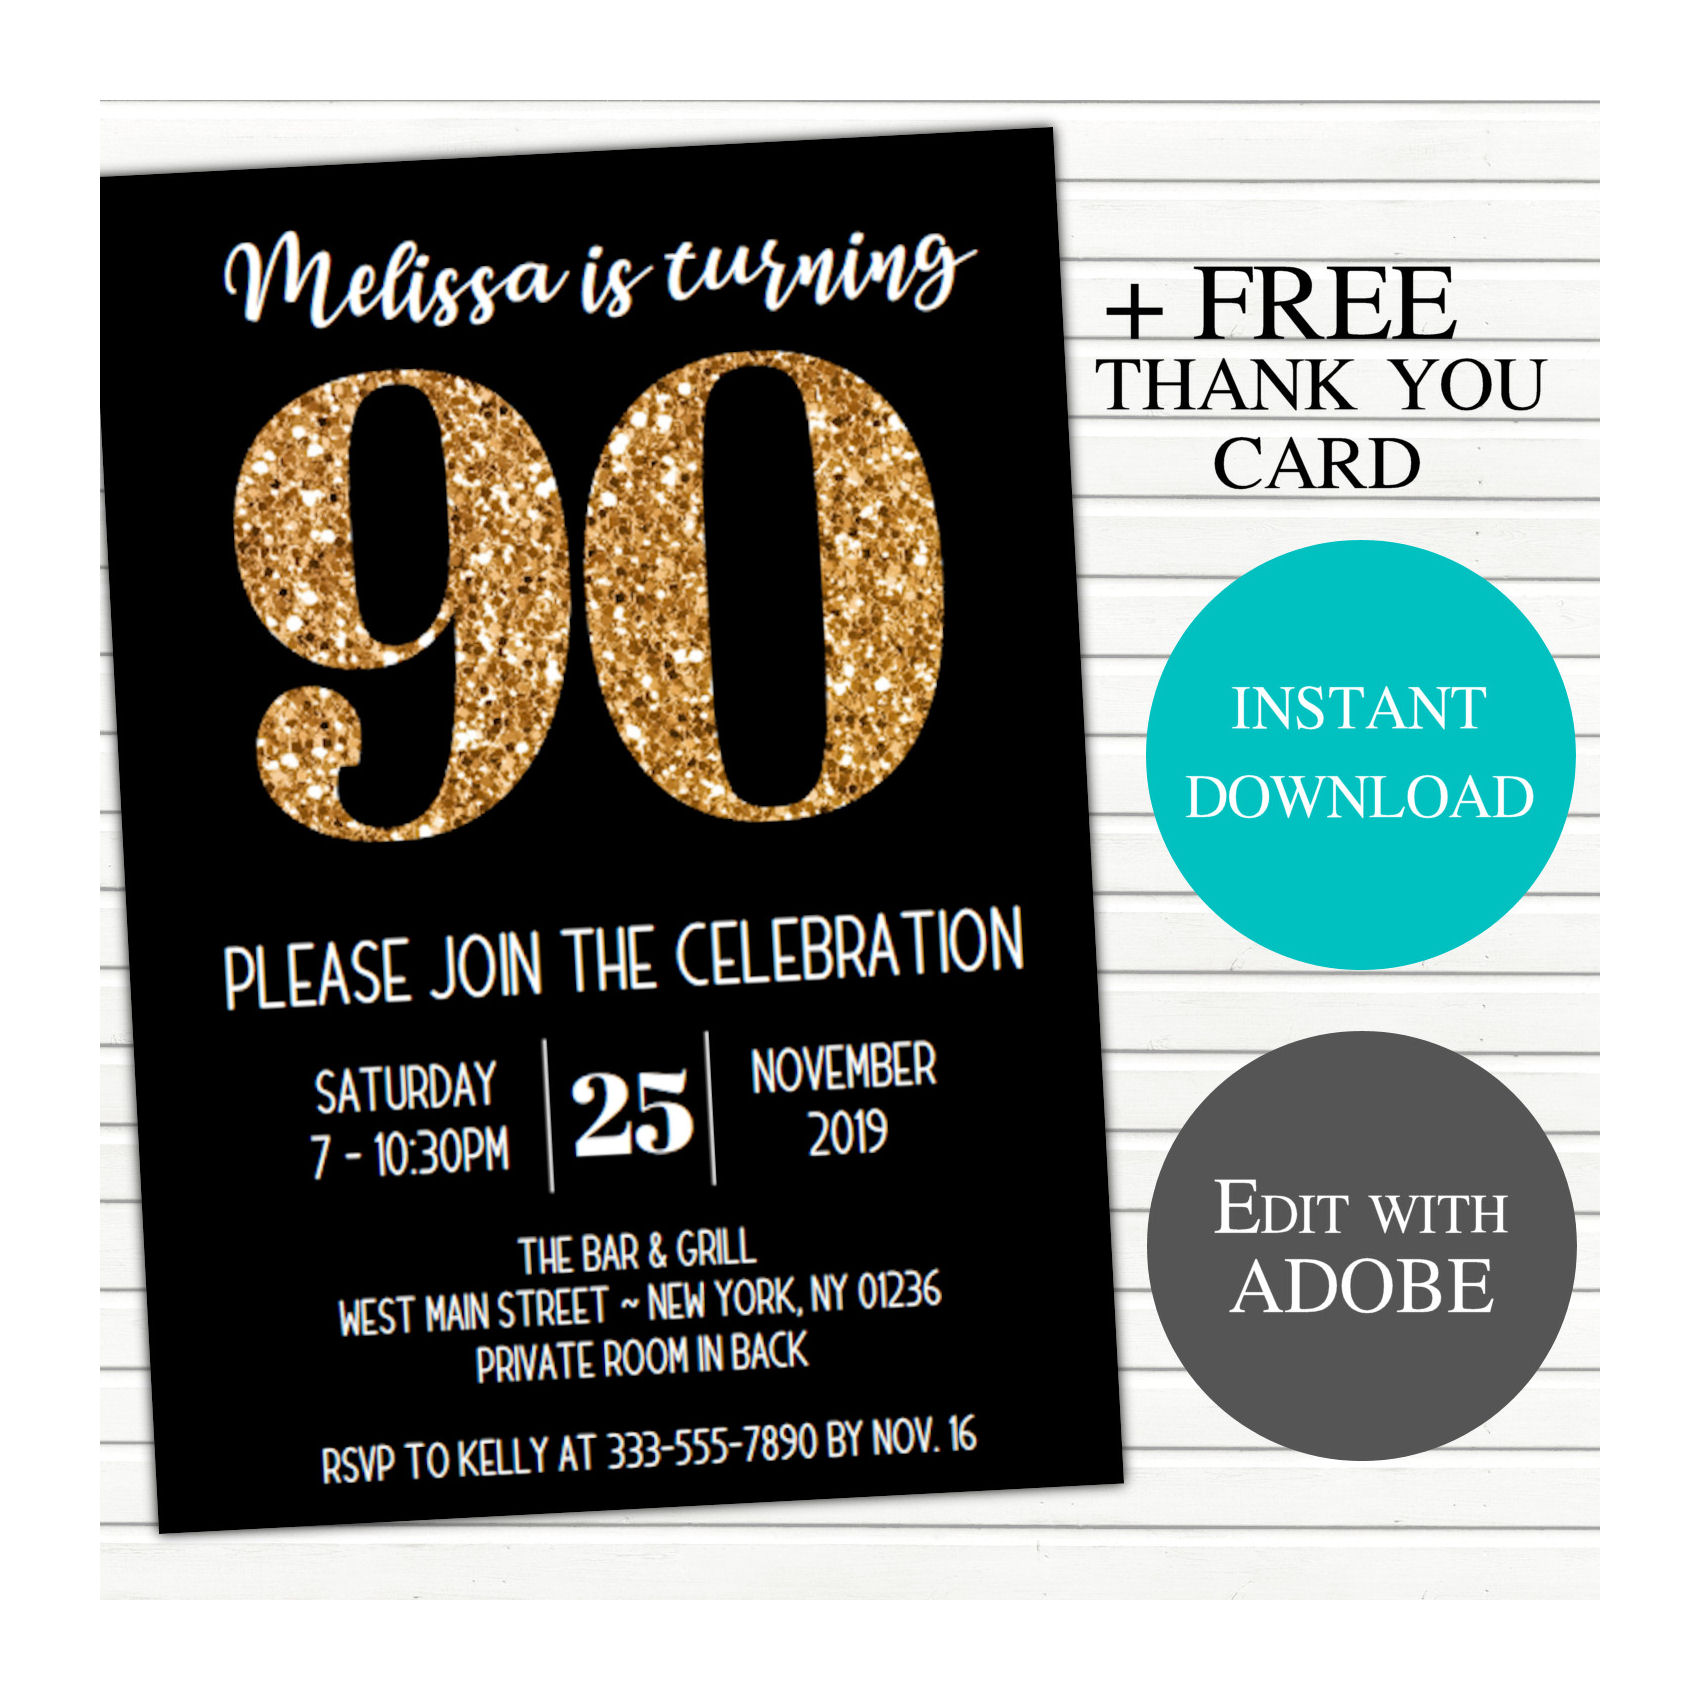 printable-90th-birthday-invitations